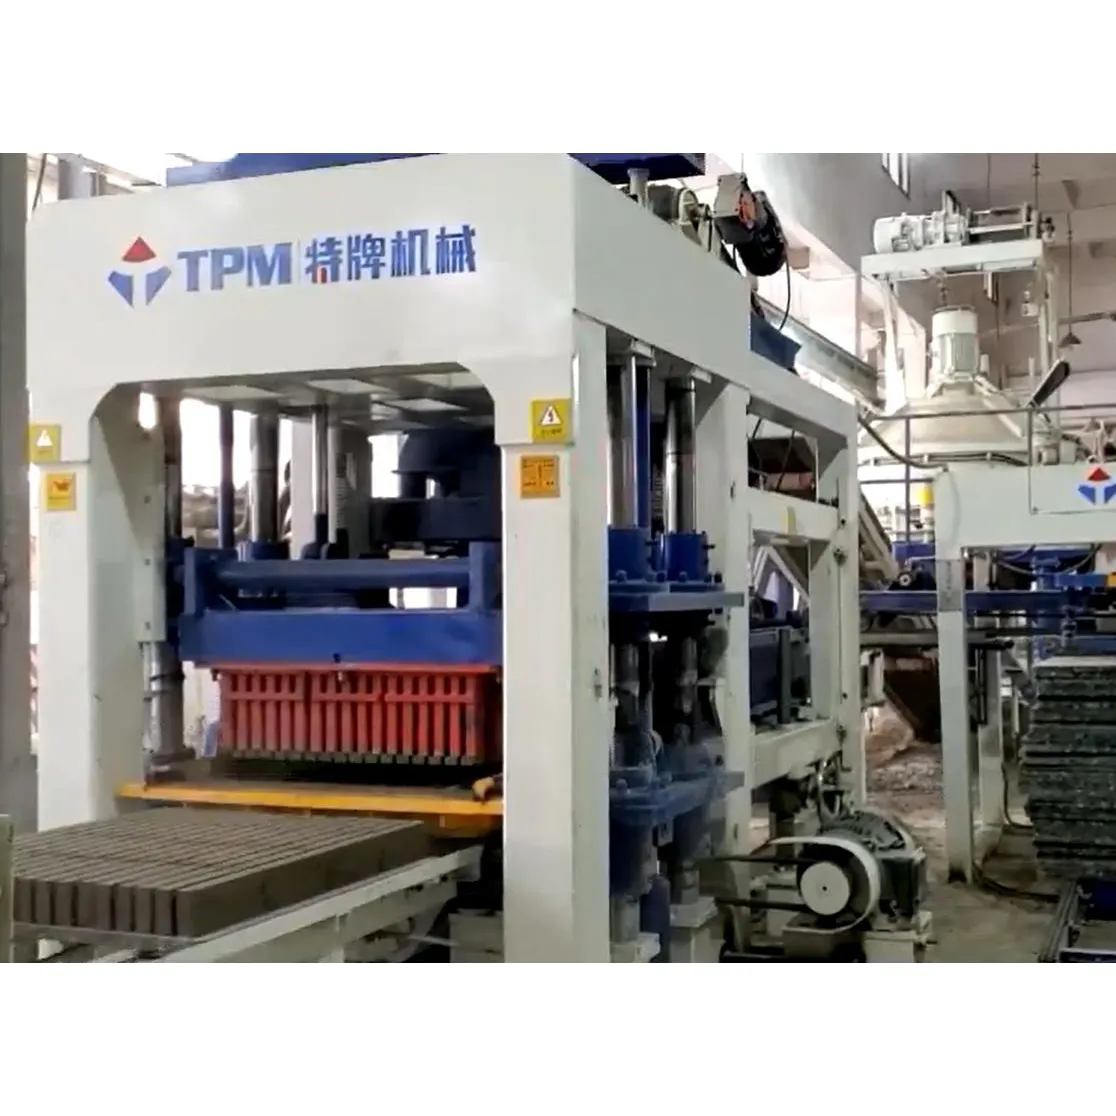 Fabrik TPM10000 Beton verriegelung CHB Blockform maschine Zement automatische Ziegel herstellungs maschine